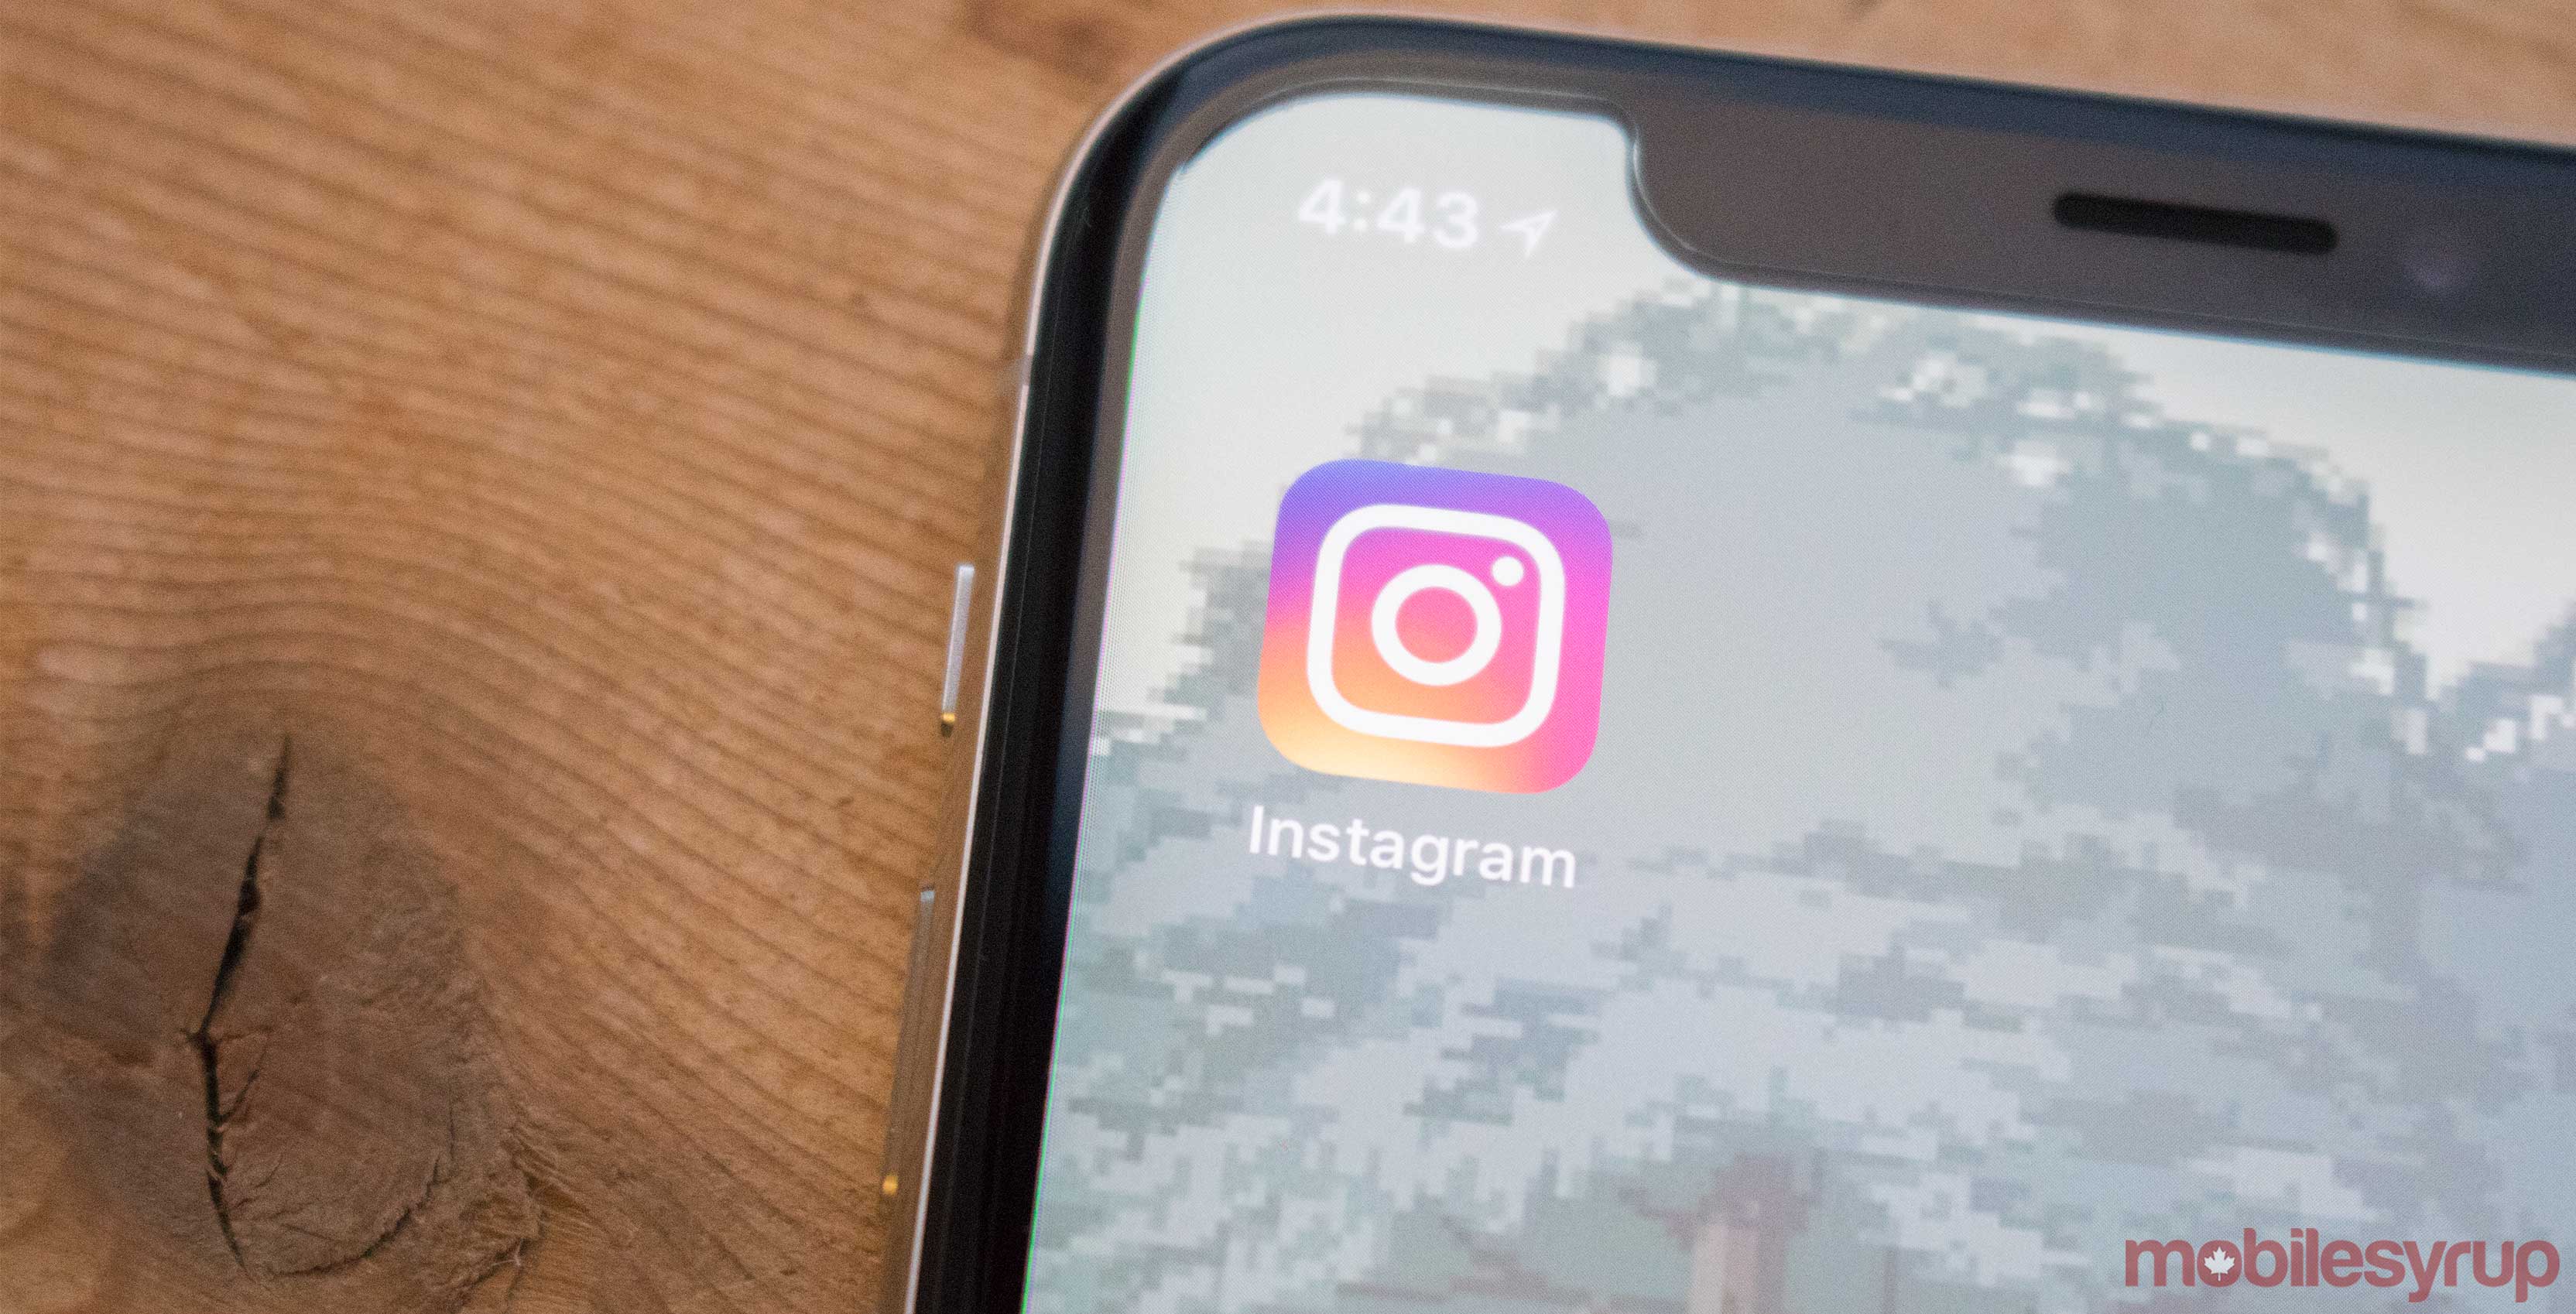 Instagram will remove fake accounts